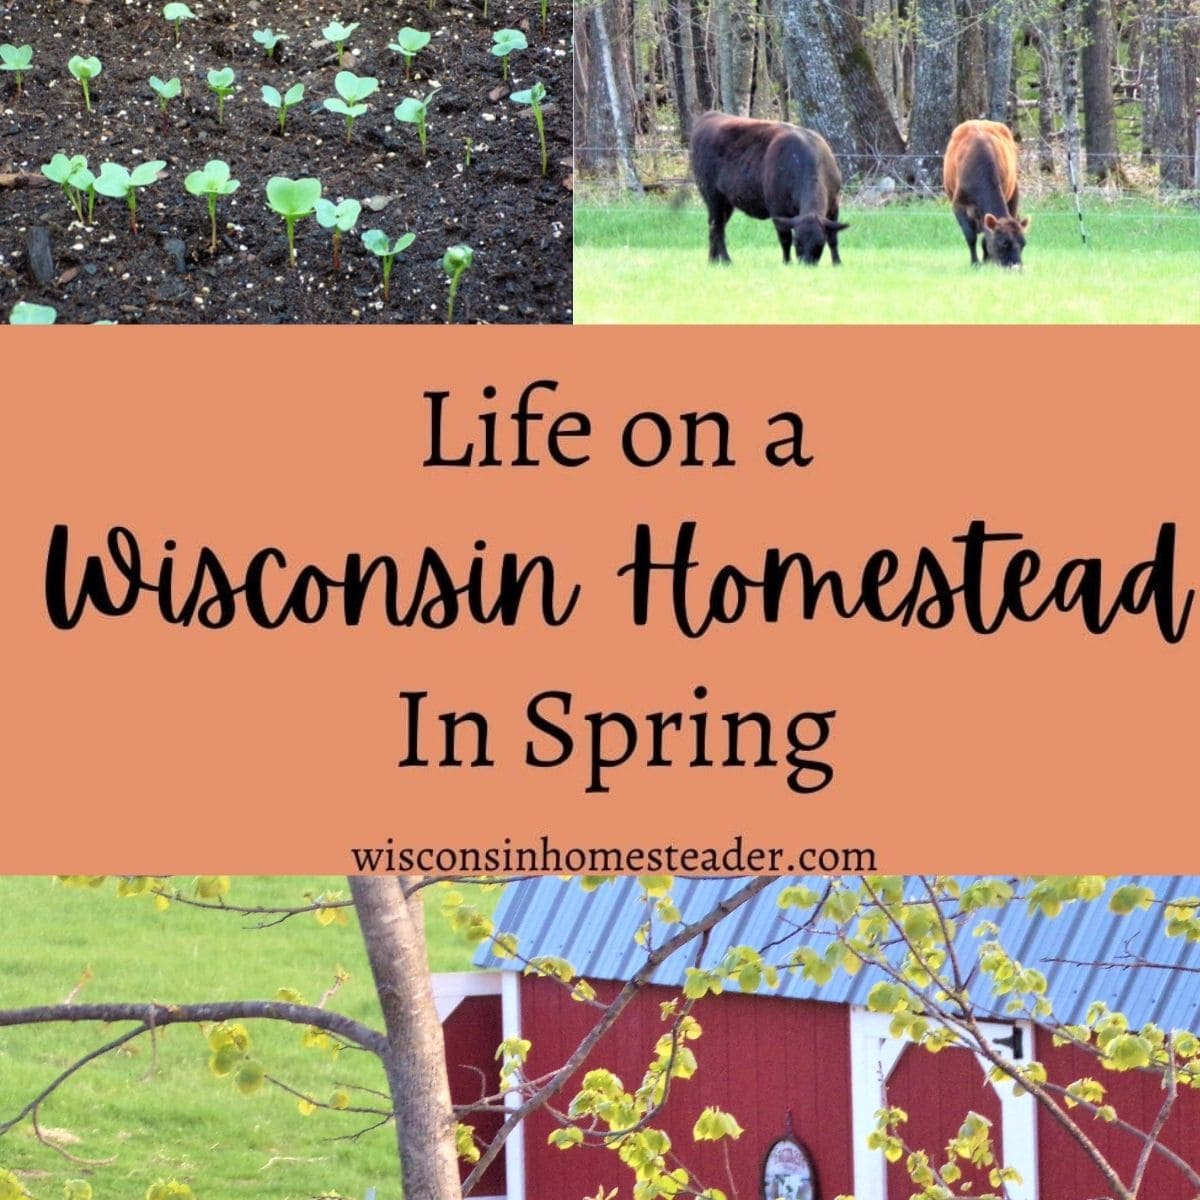 Wisconsin homestead in spring